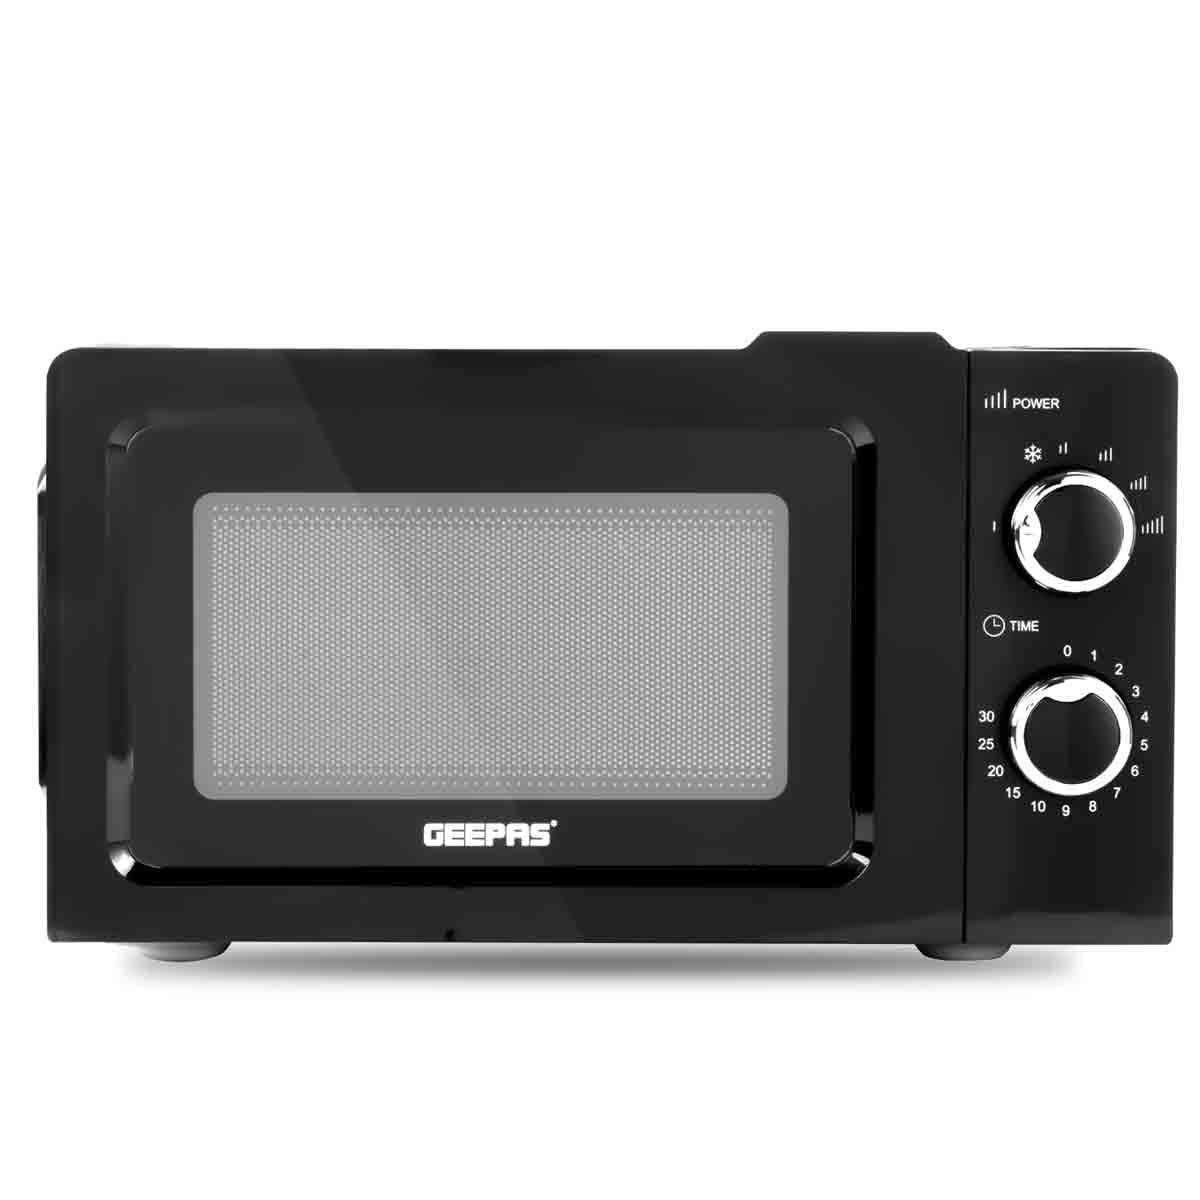 Geepas Gmo1899-bl 20L 700W Solo Manual Microwave - Black